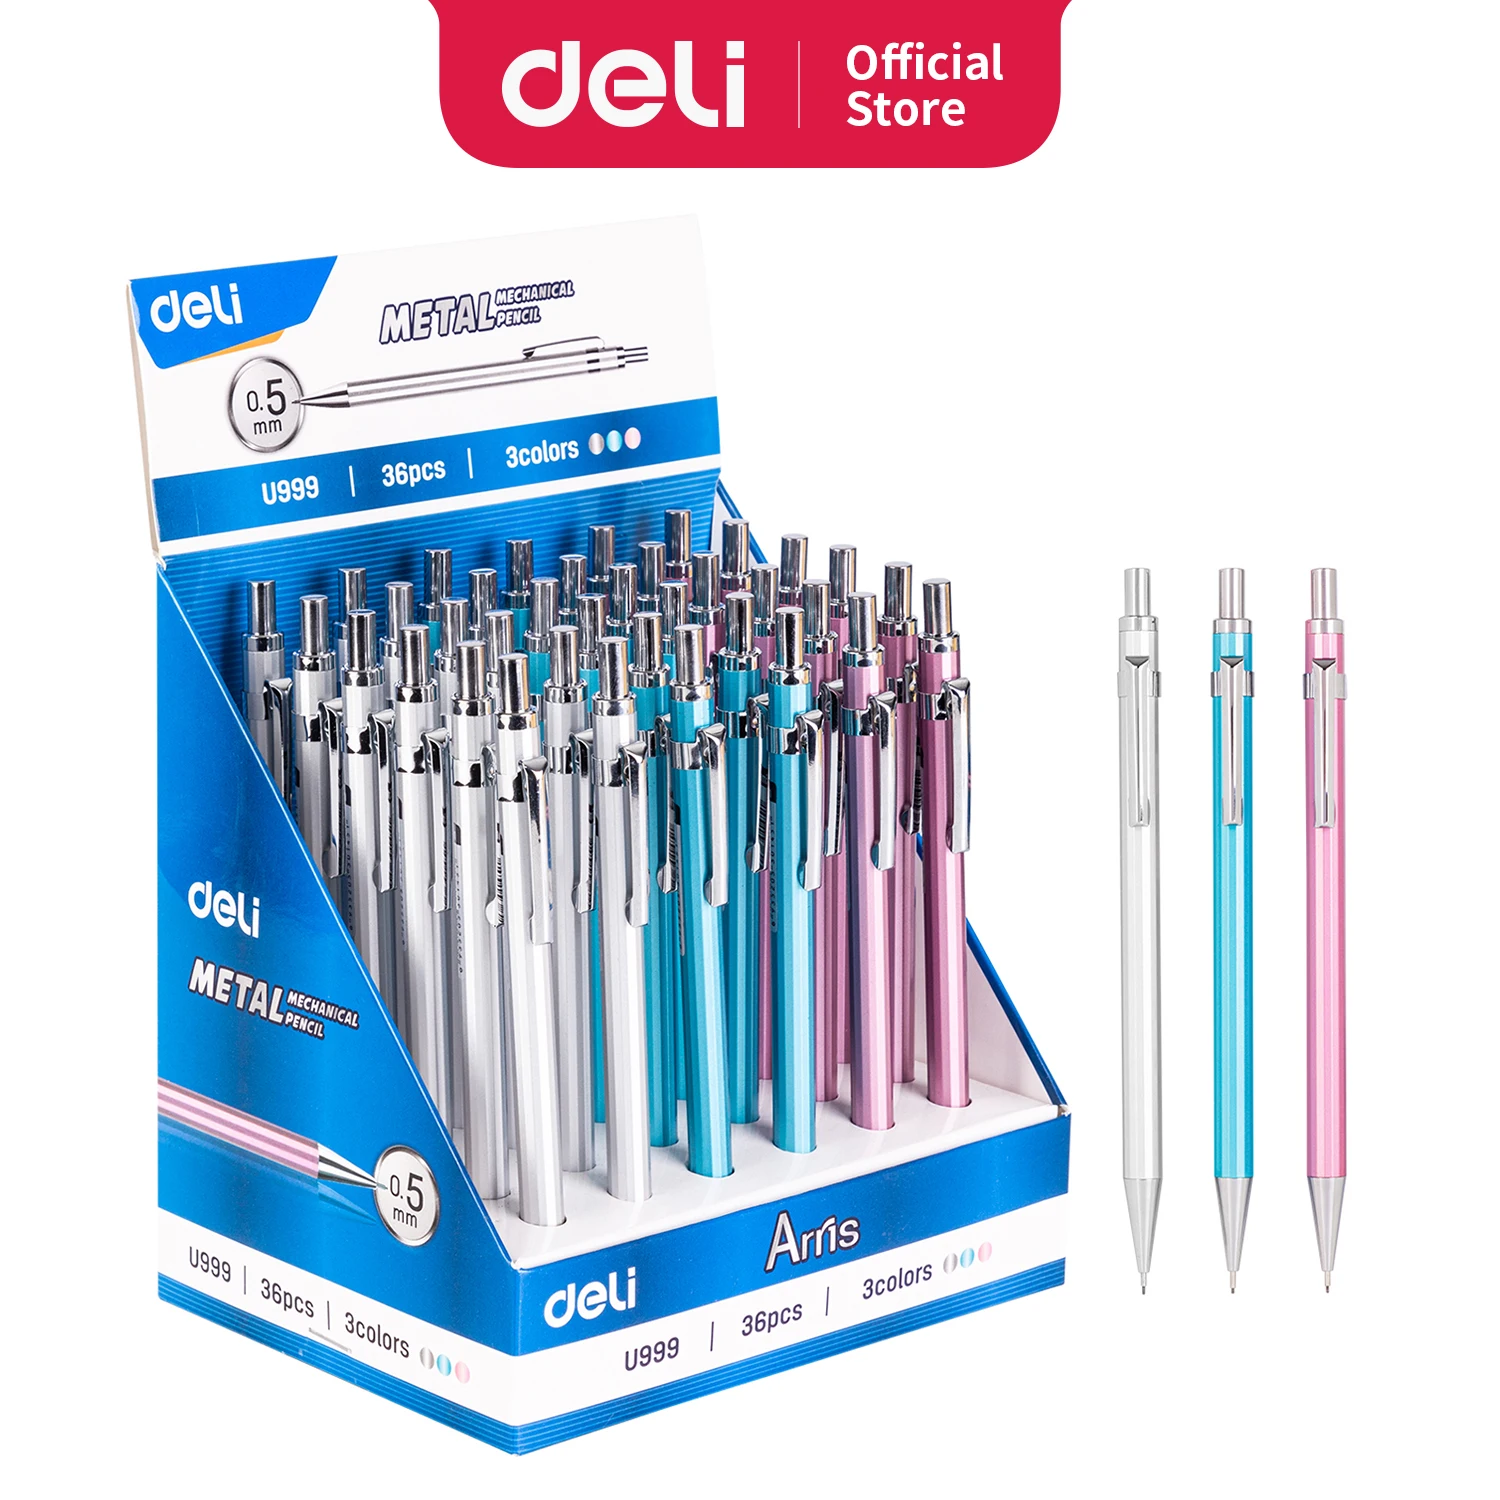 Deli Metal Mechanical Pencil 0.5mm 0.7mm with Lead Retractable Black Lead Pencils Stationery School Supplies Art Sketch Writing